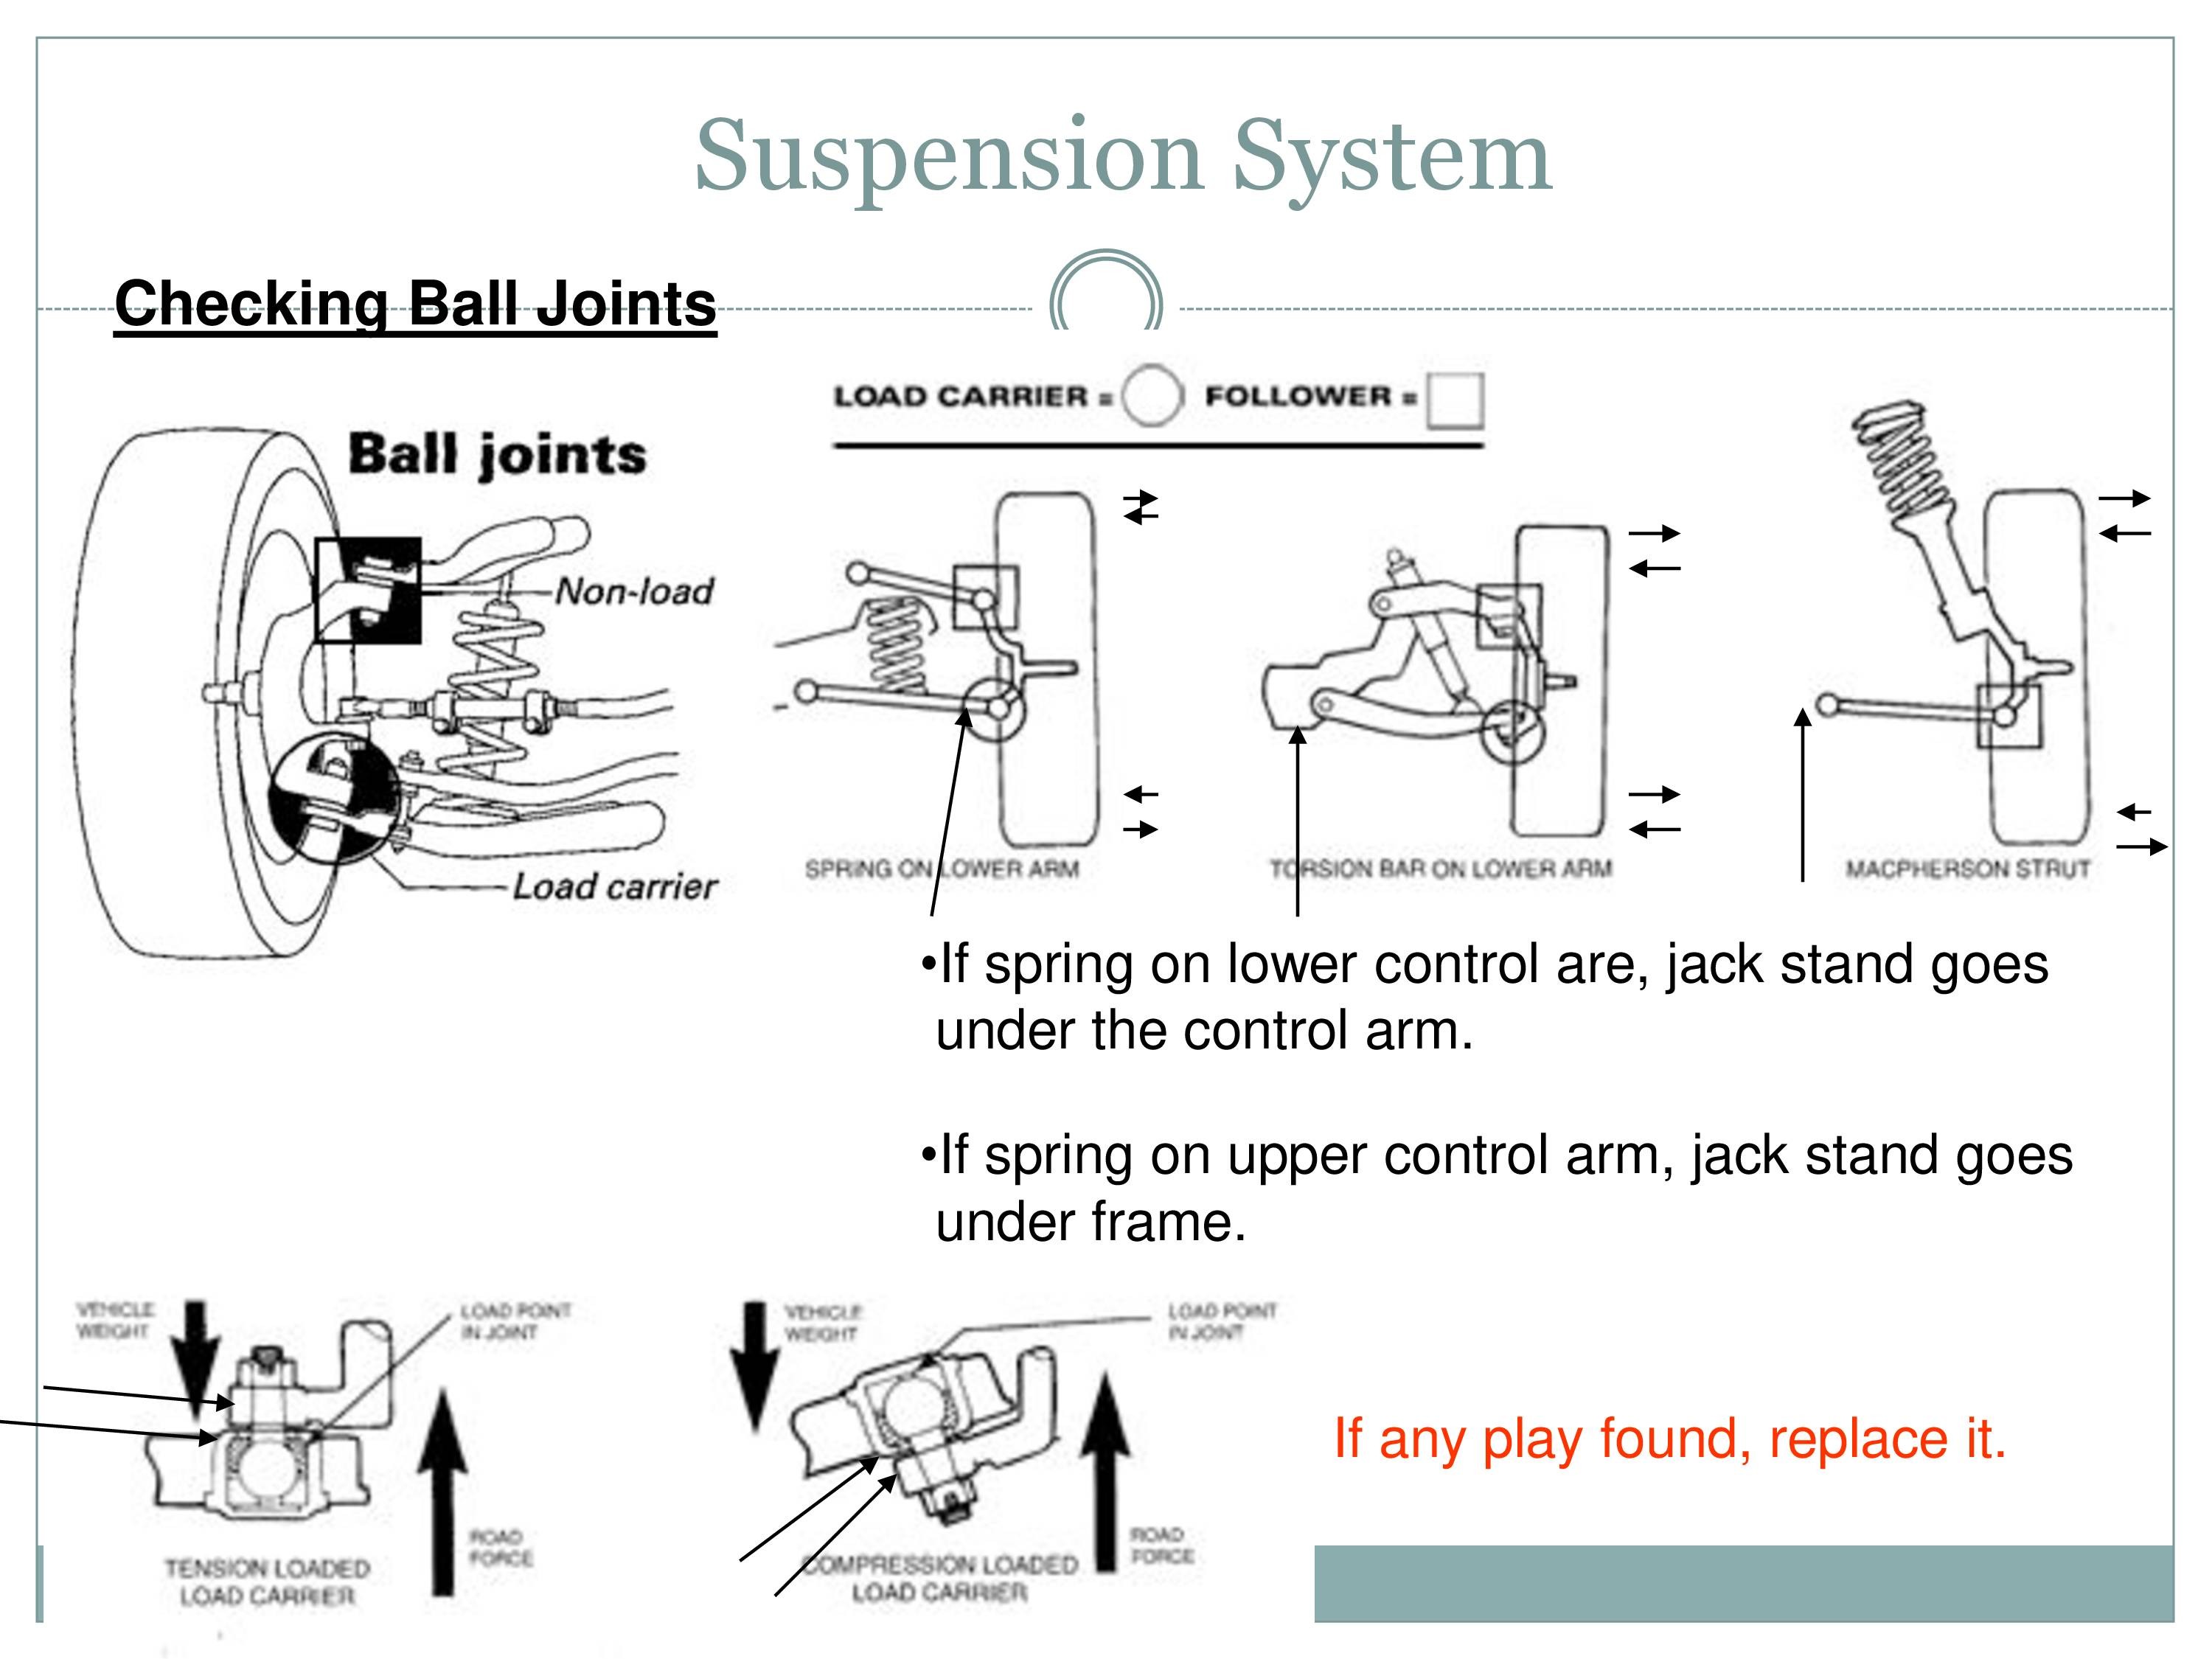 Macpherson Strut Suspension Diagram Suspension System Powerpoint Slides Of Macpherson Strut Suspension Diagram